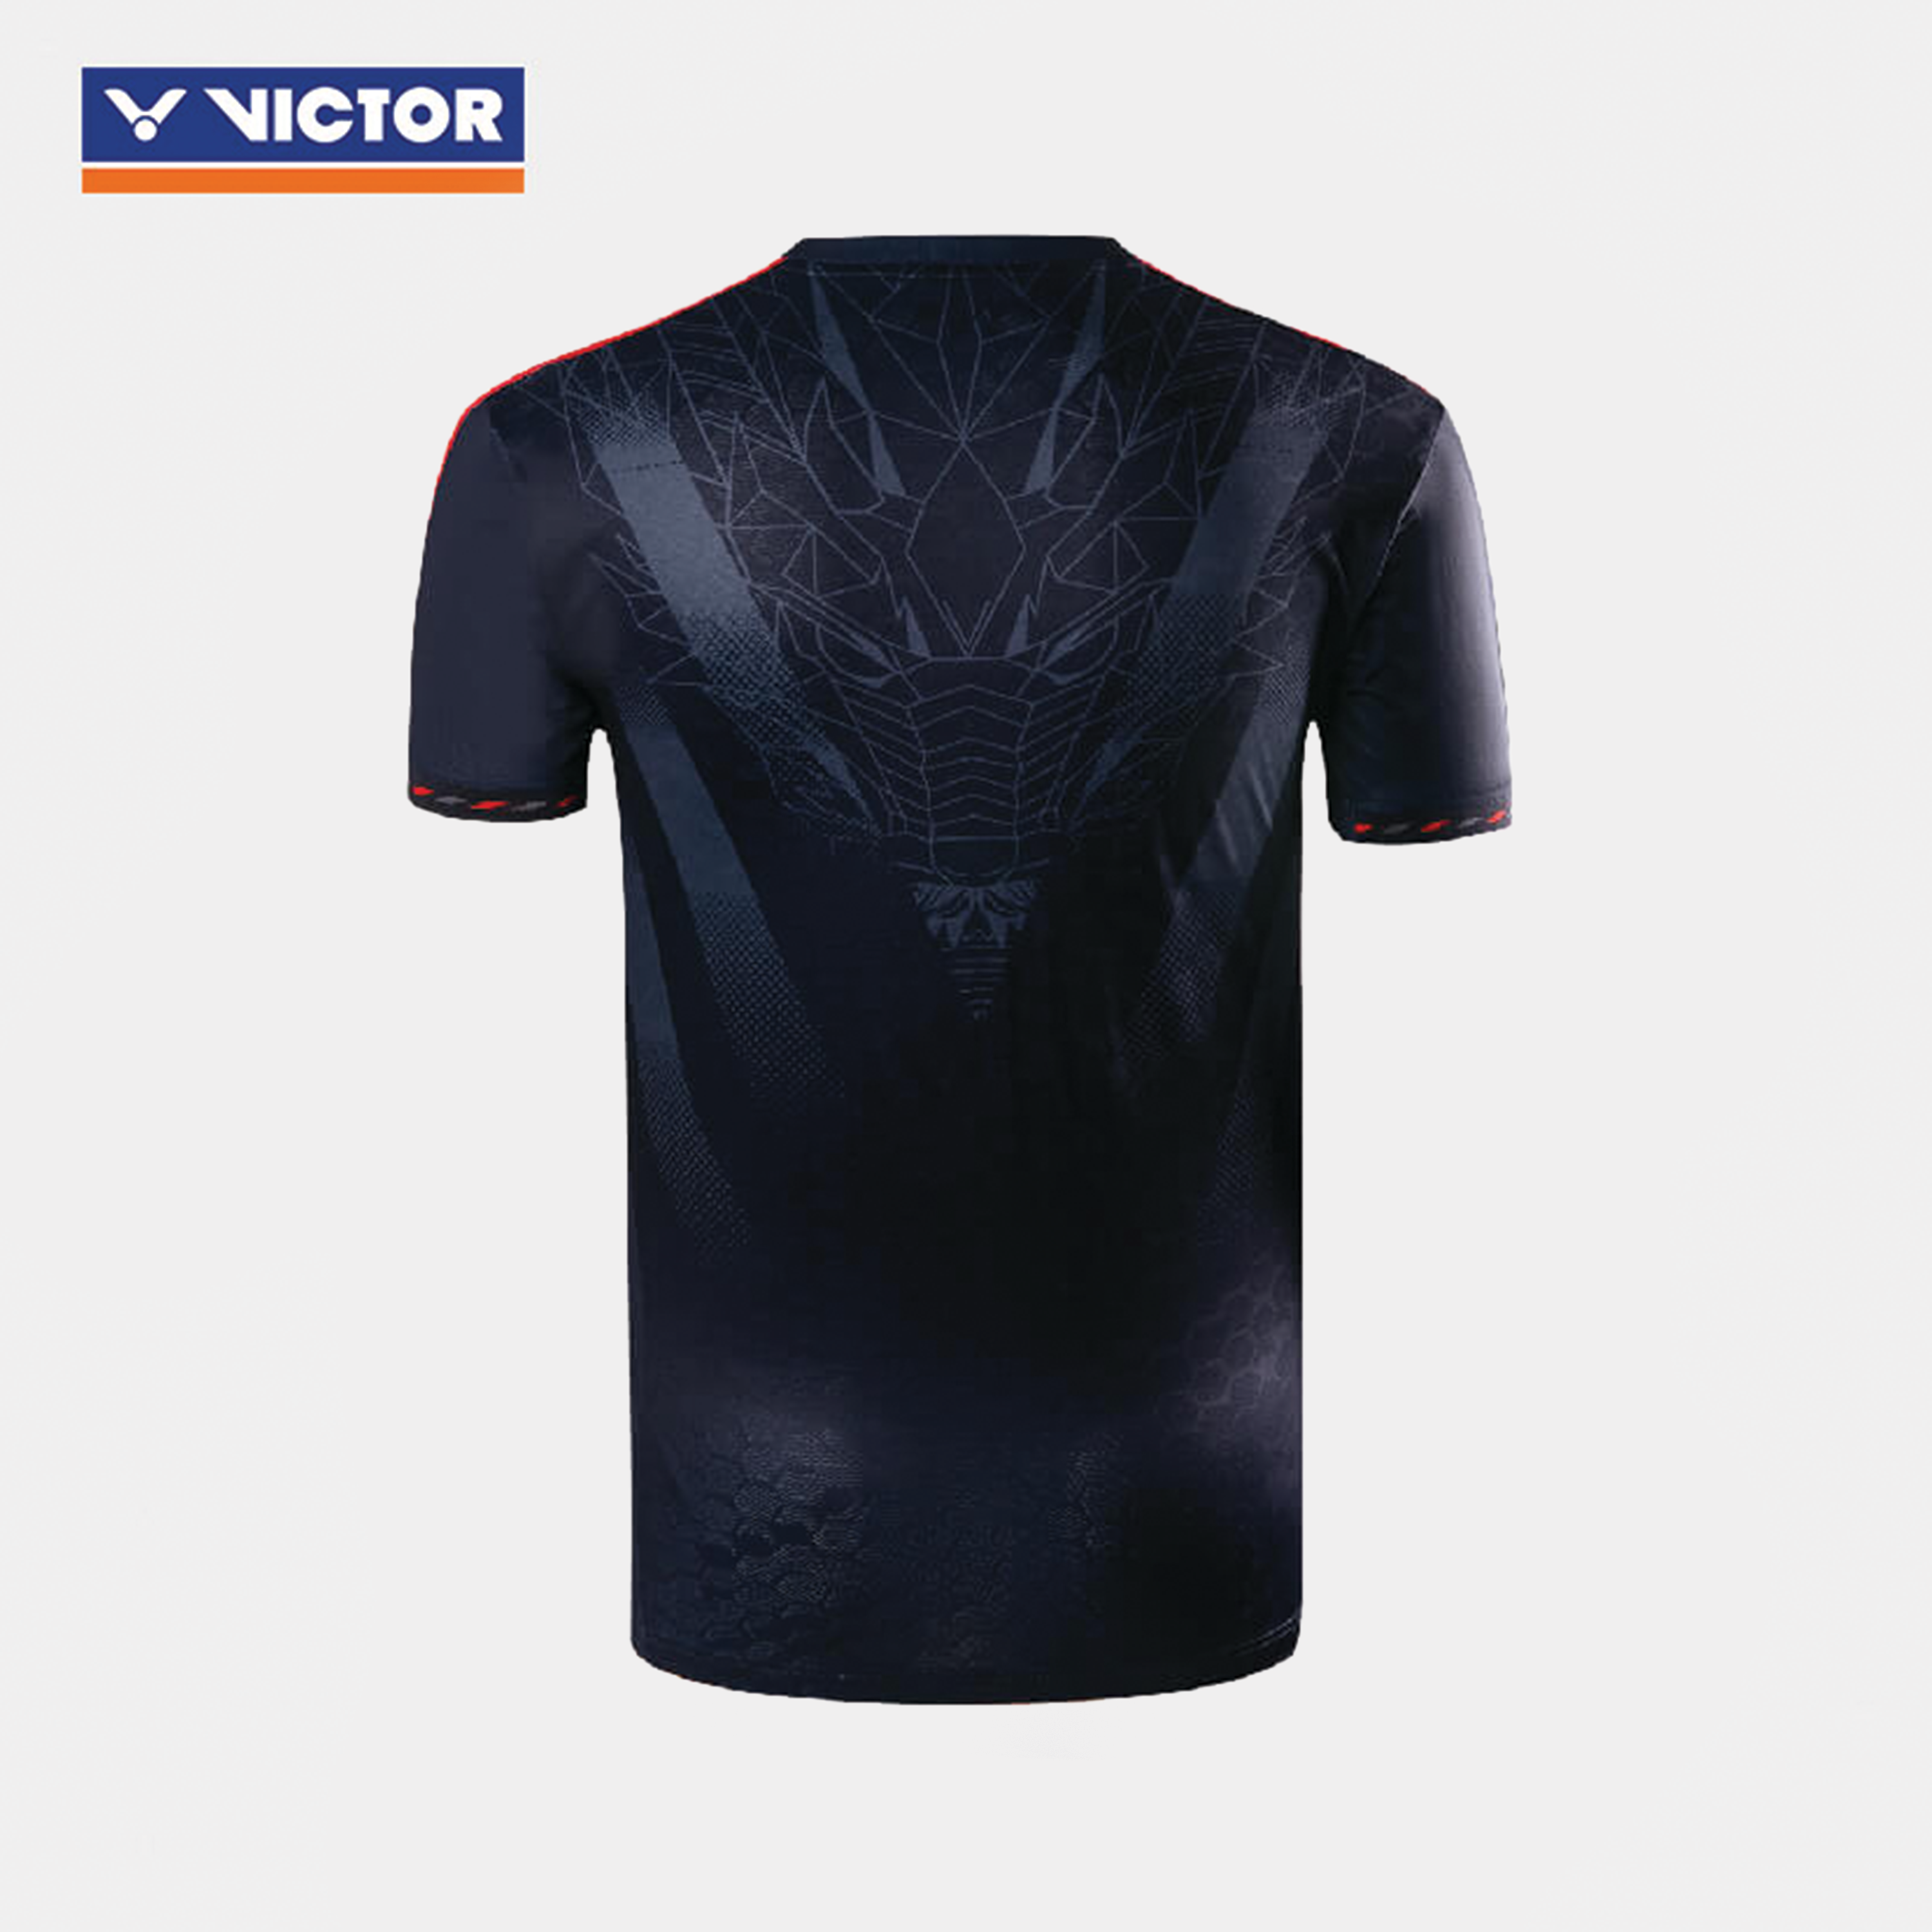 Victor X LZJ T-40005C Sports Shirt Black MEN'S